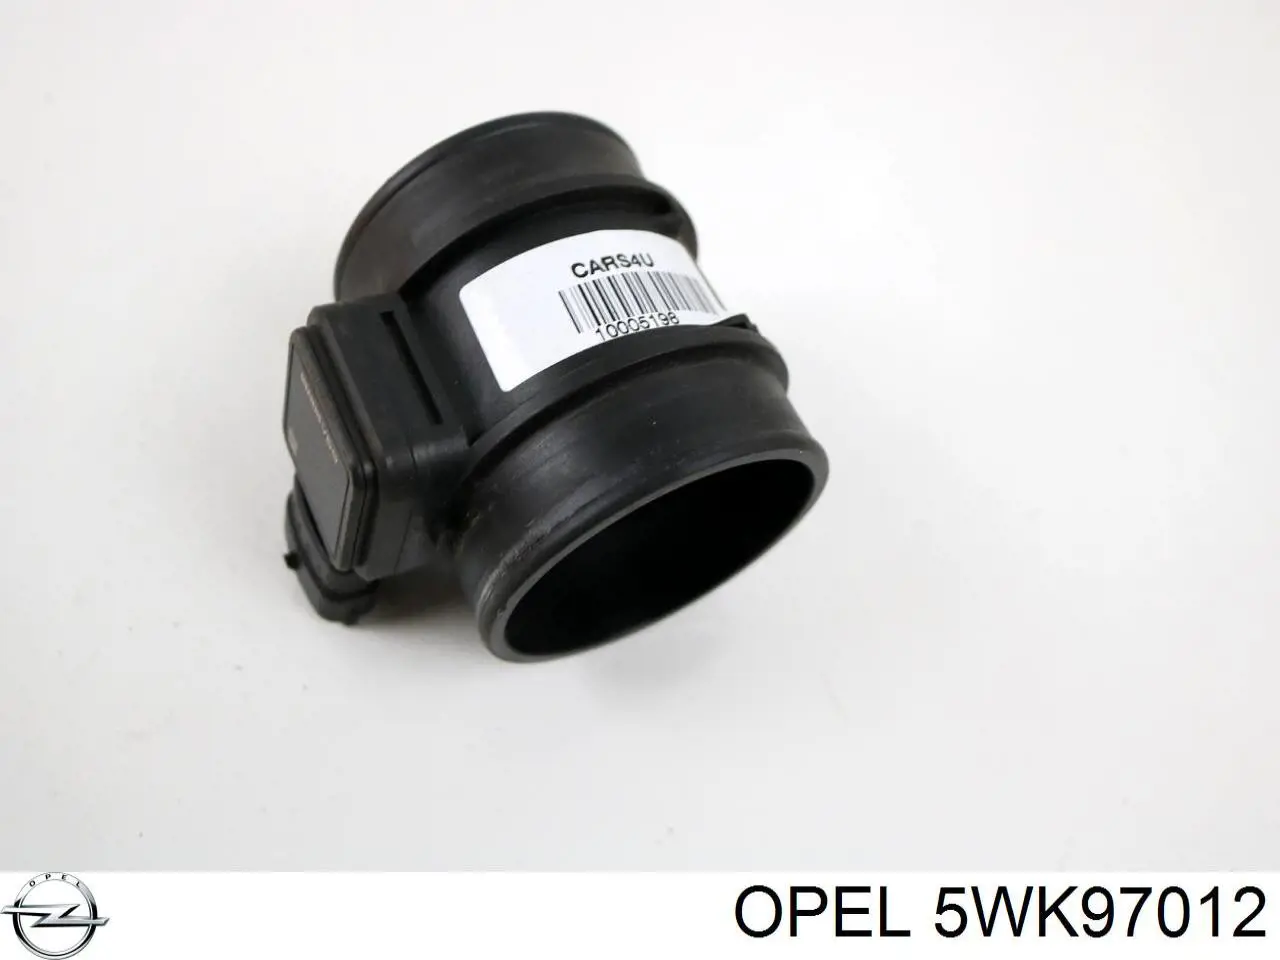 5WK97012 Opel sensor de fluxo (consumo de ar, medidor de consumo M.A.F. - (Mass Airflow))